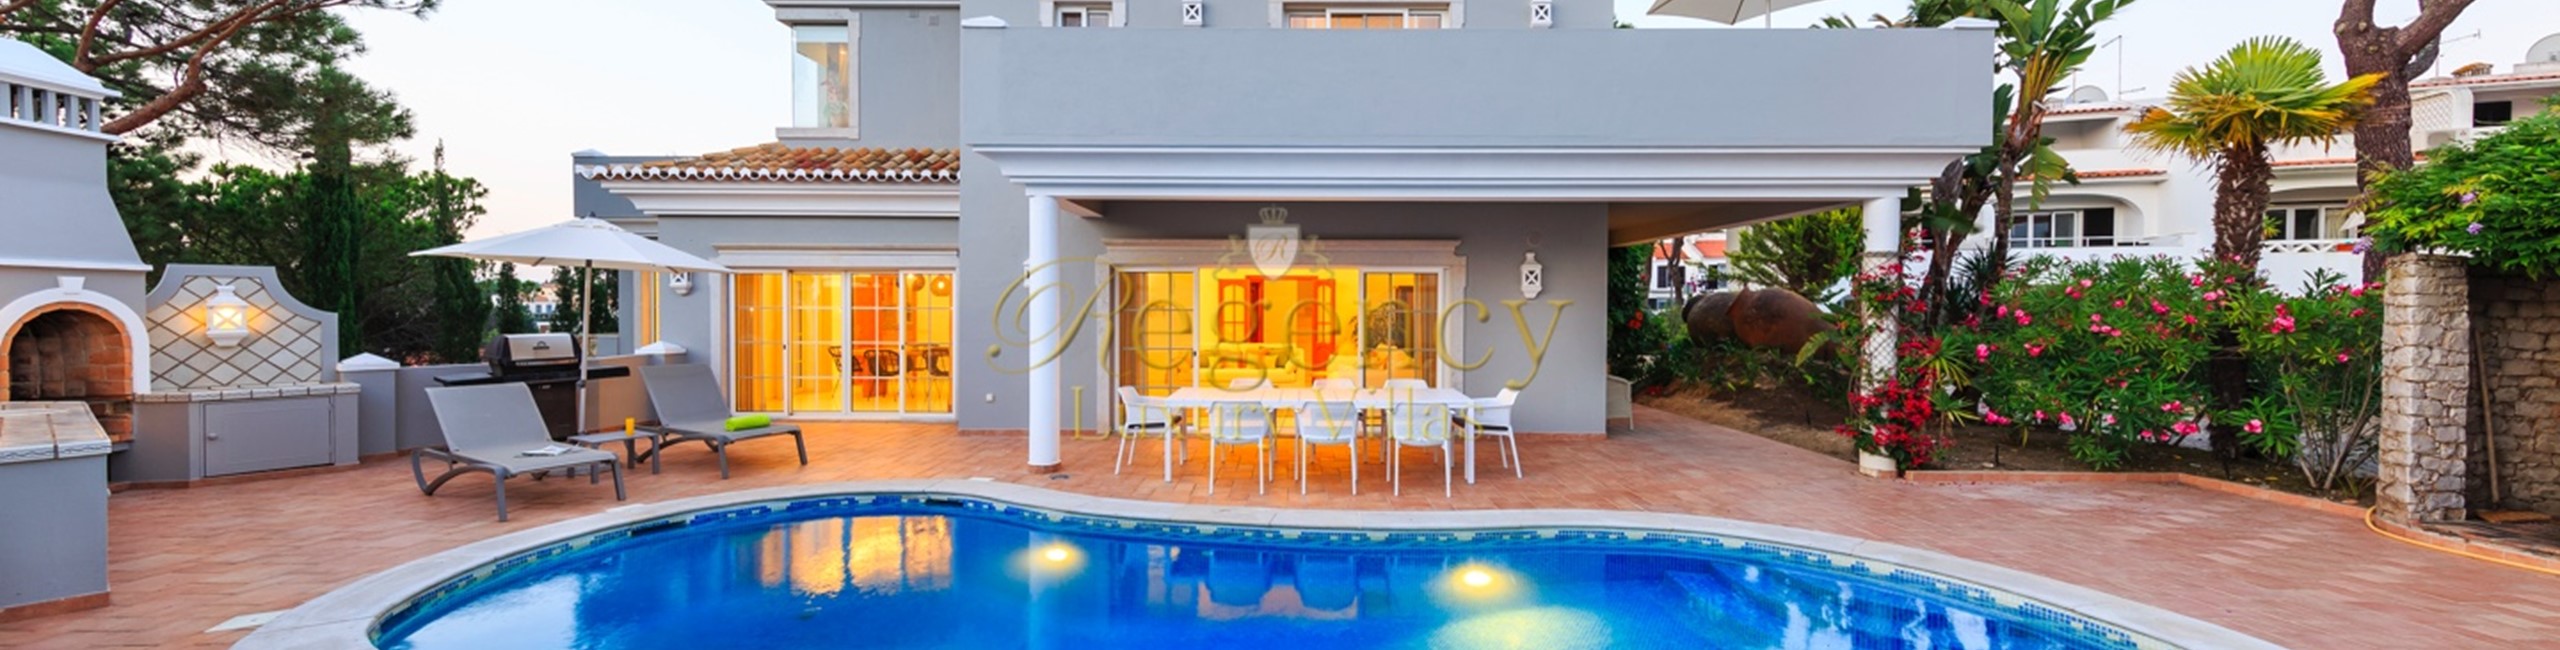 Luxury Villa Rental In Vale Do Lobo Resort 5 Bedroom